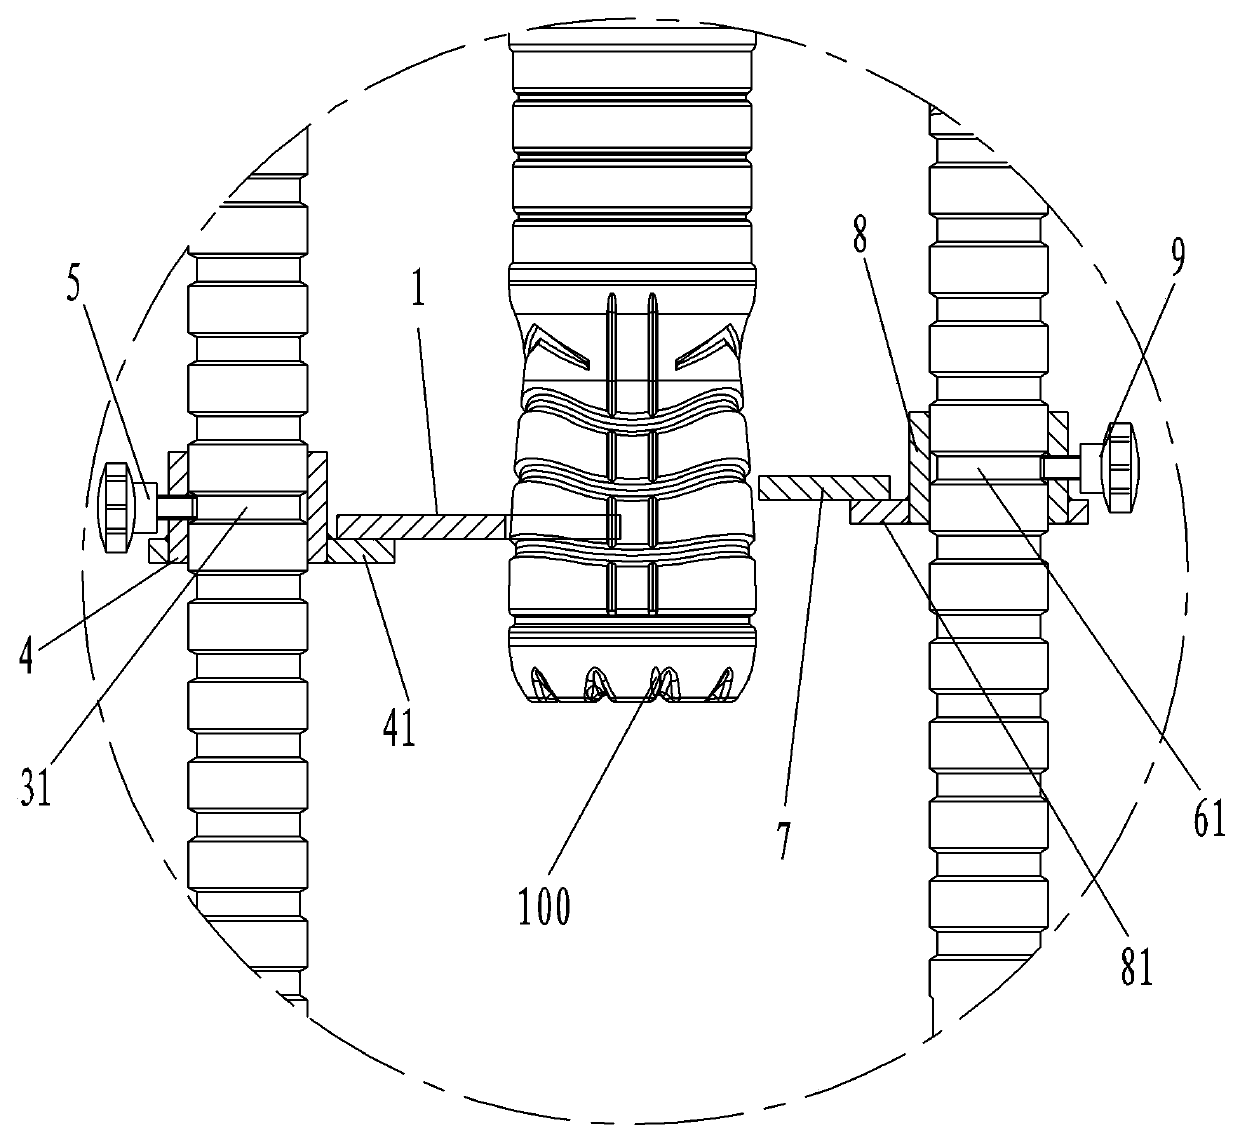 Star wheel transmission mechanism for conveying bottles